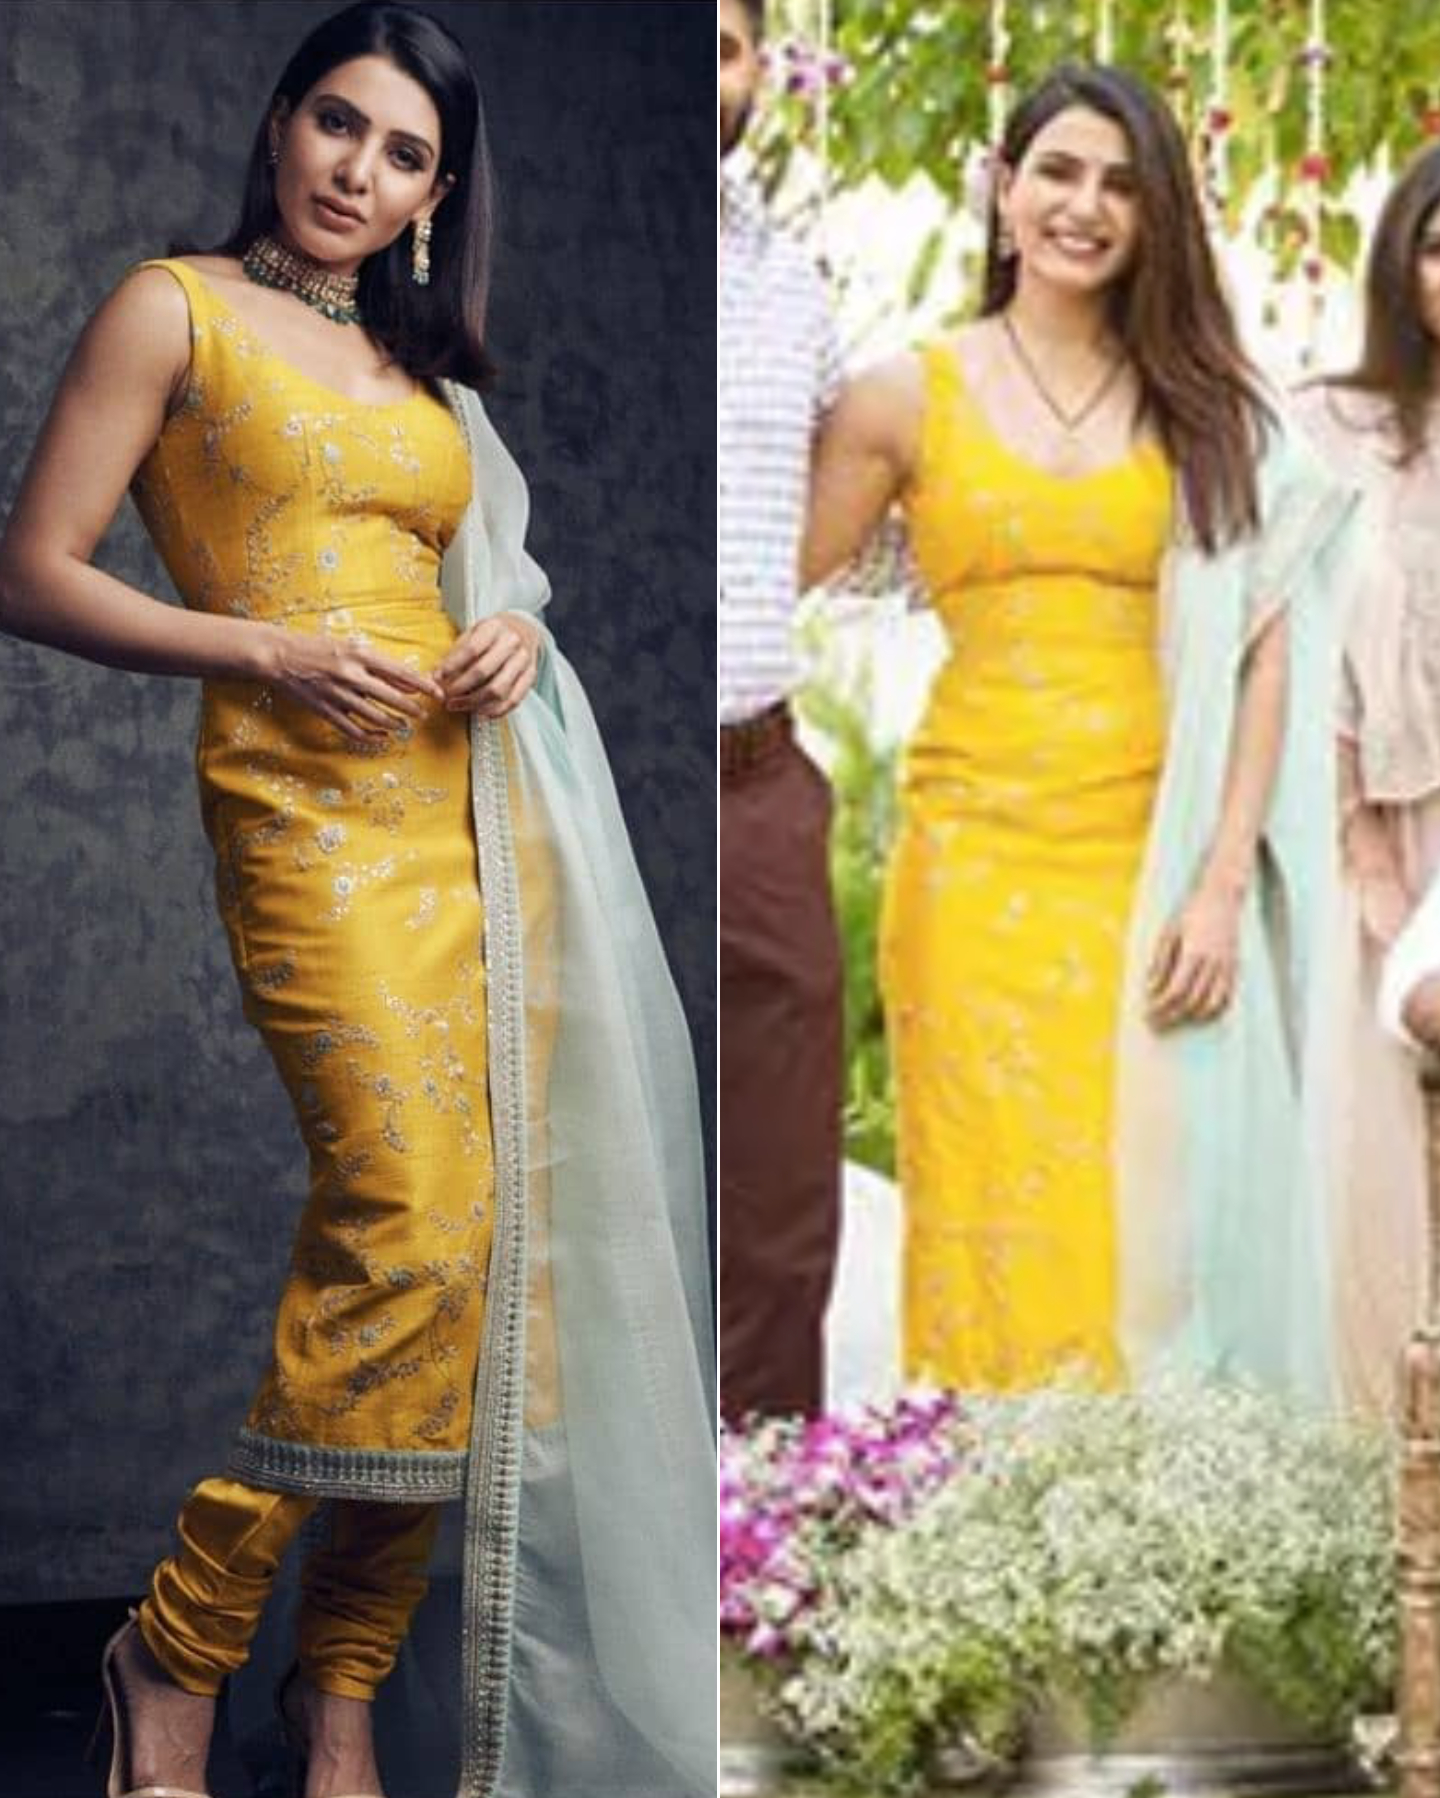 Samantha Ruth Prabhu repeats her Sabyasachi yellow dress at Rana Daggubati’s wedding celebration